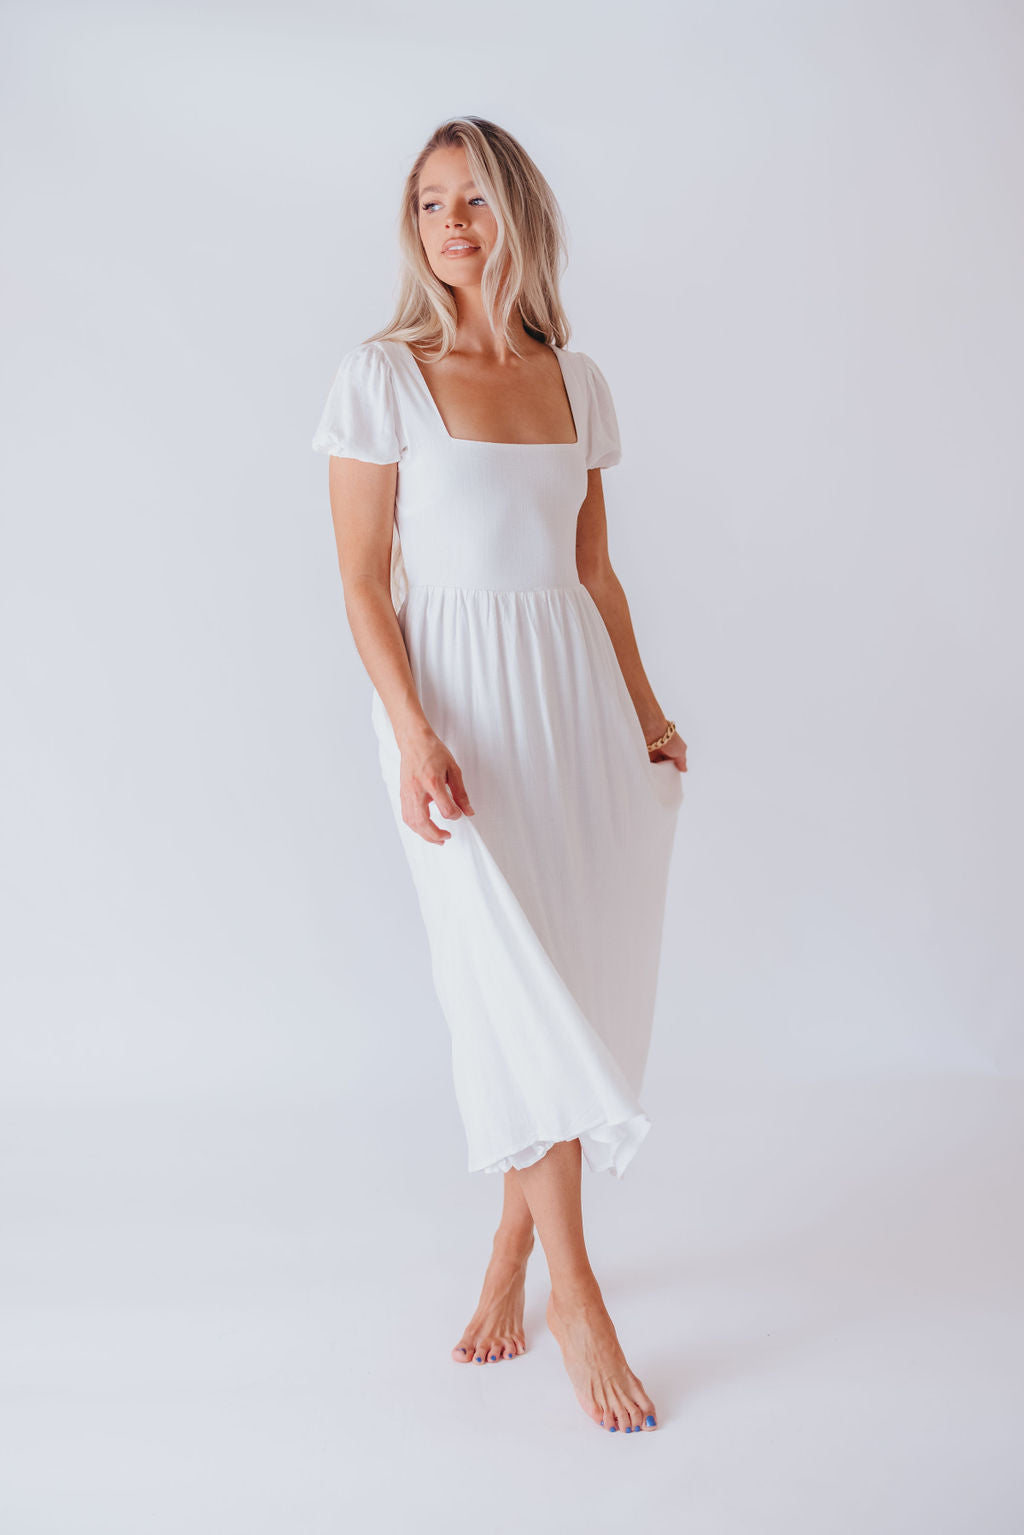 August Open Back Midi Dress in White - Bump Friendly